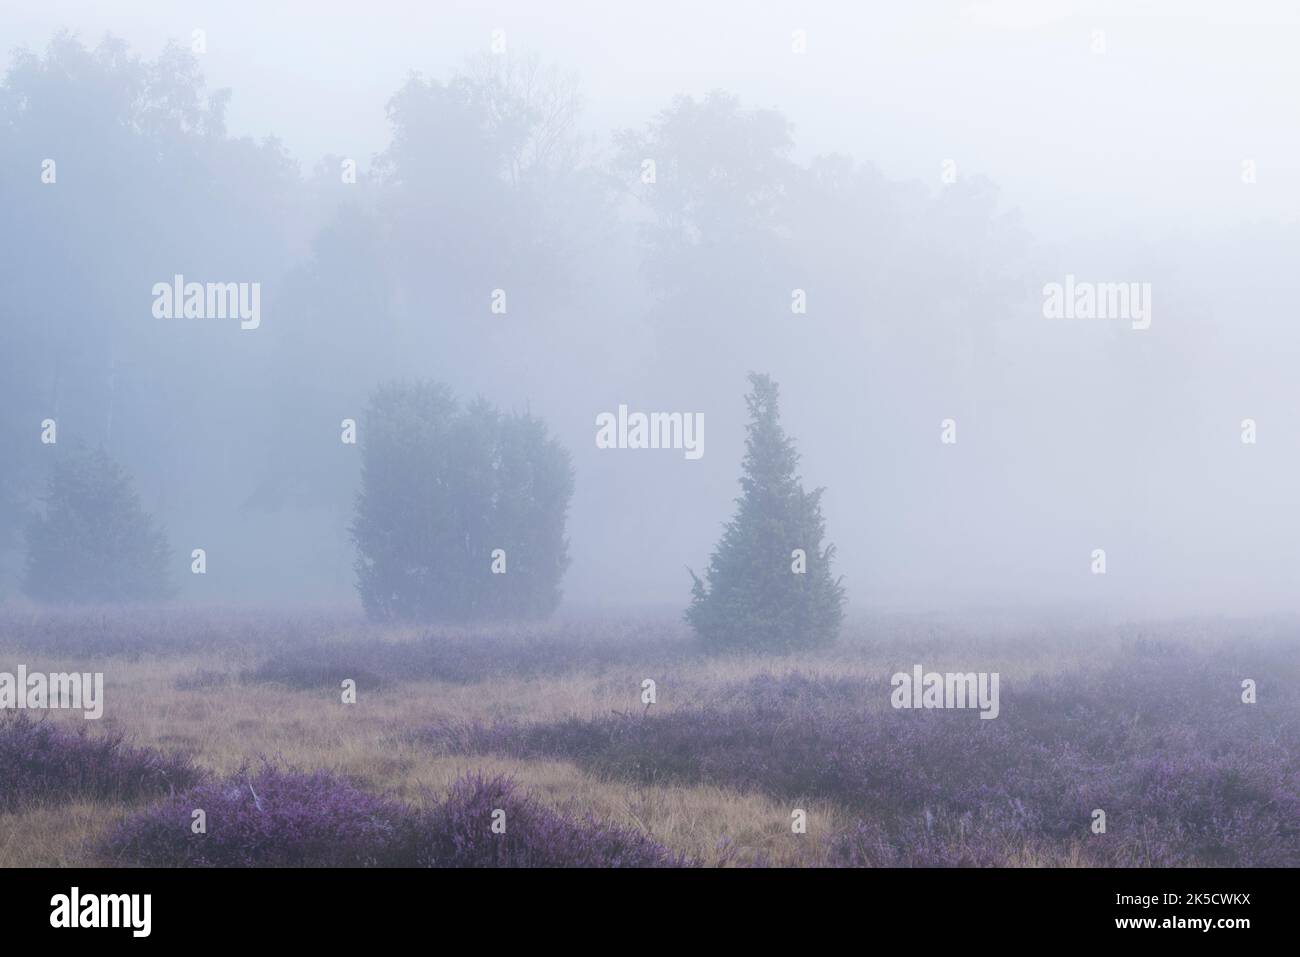 Juniper bushes and flowering heather in dense fog, Oberoher Heide, Faßberg municipality, South Heath Nature Park, Lüneburg Heath, Germany, Lower Saxony Stock Photo